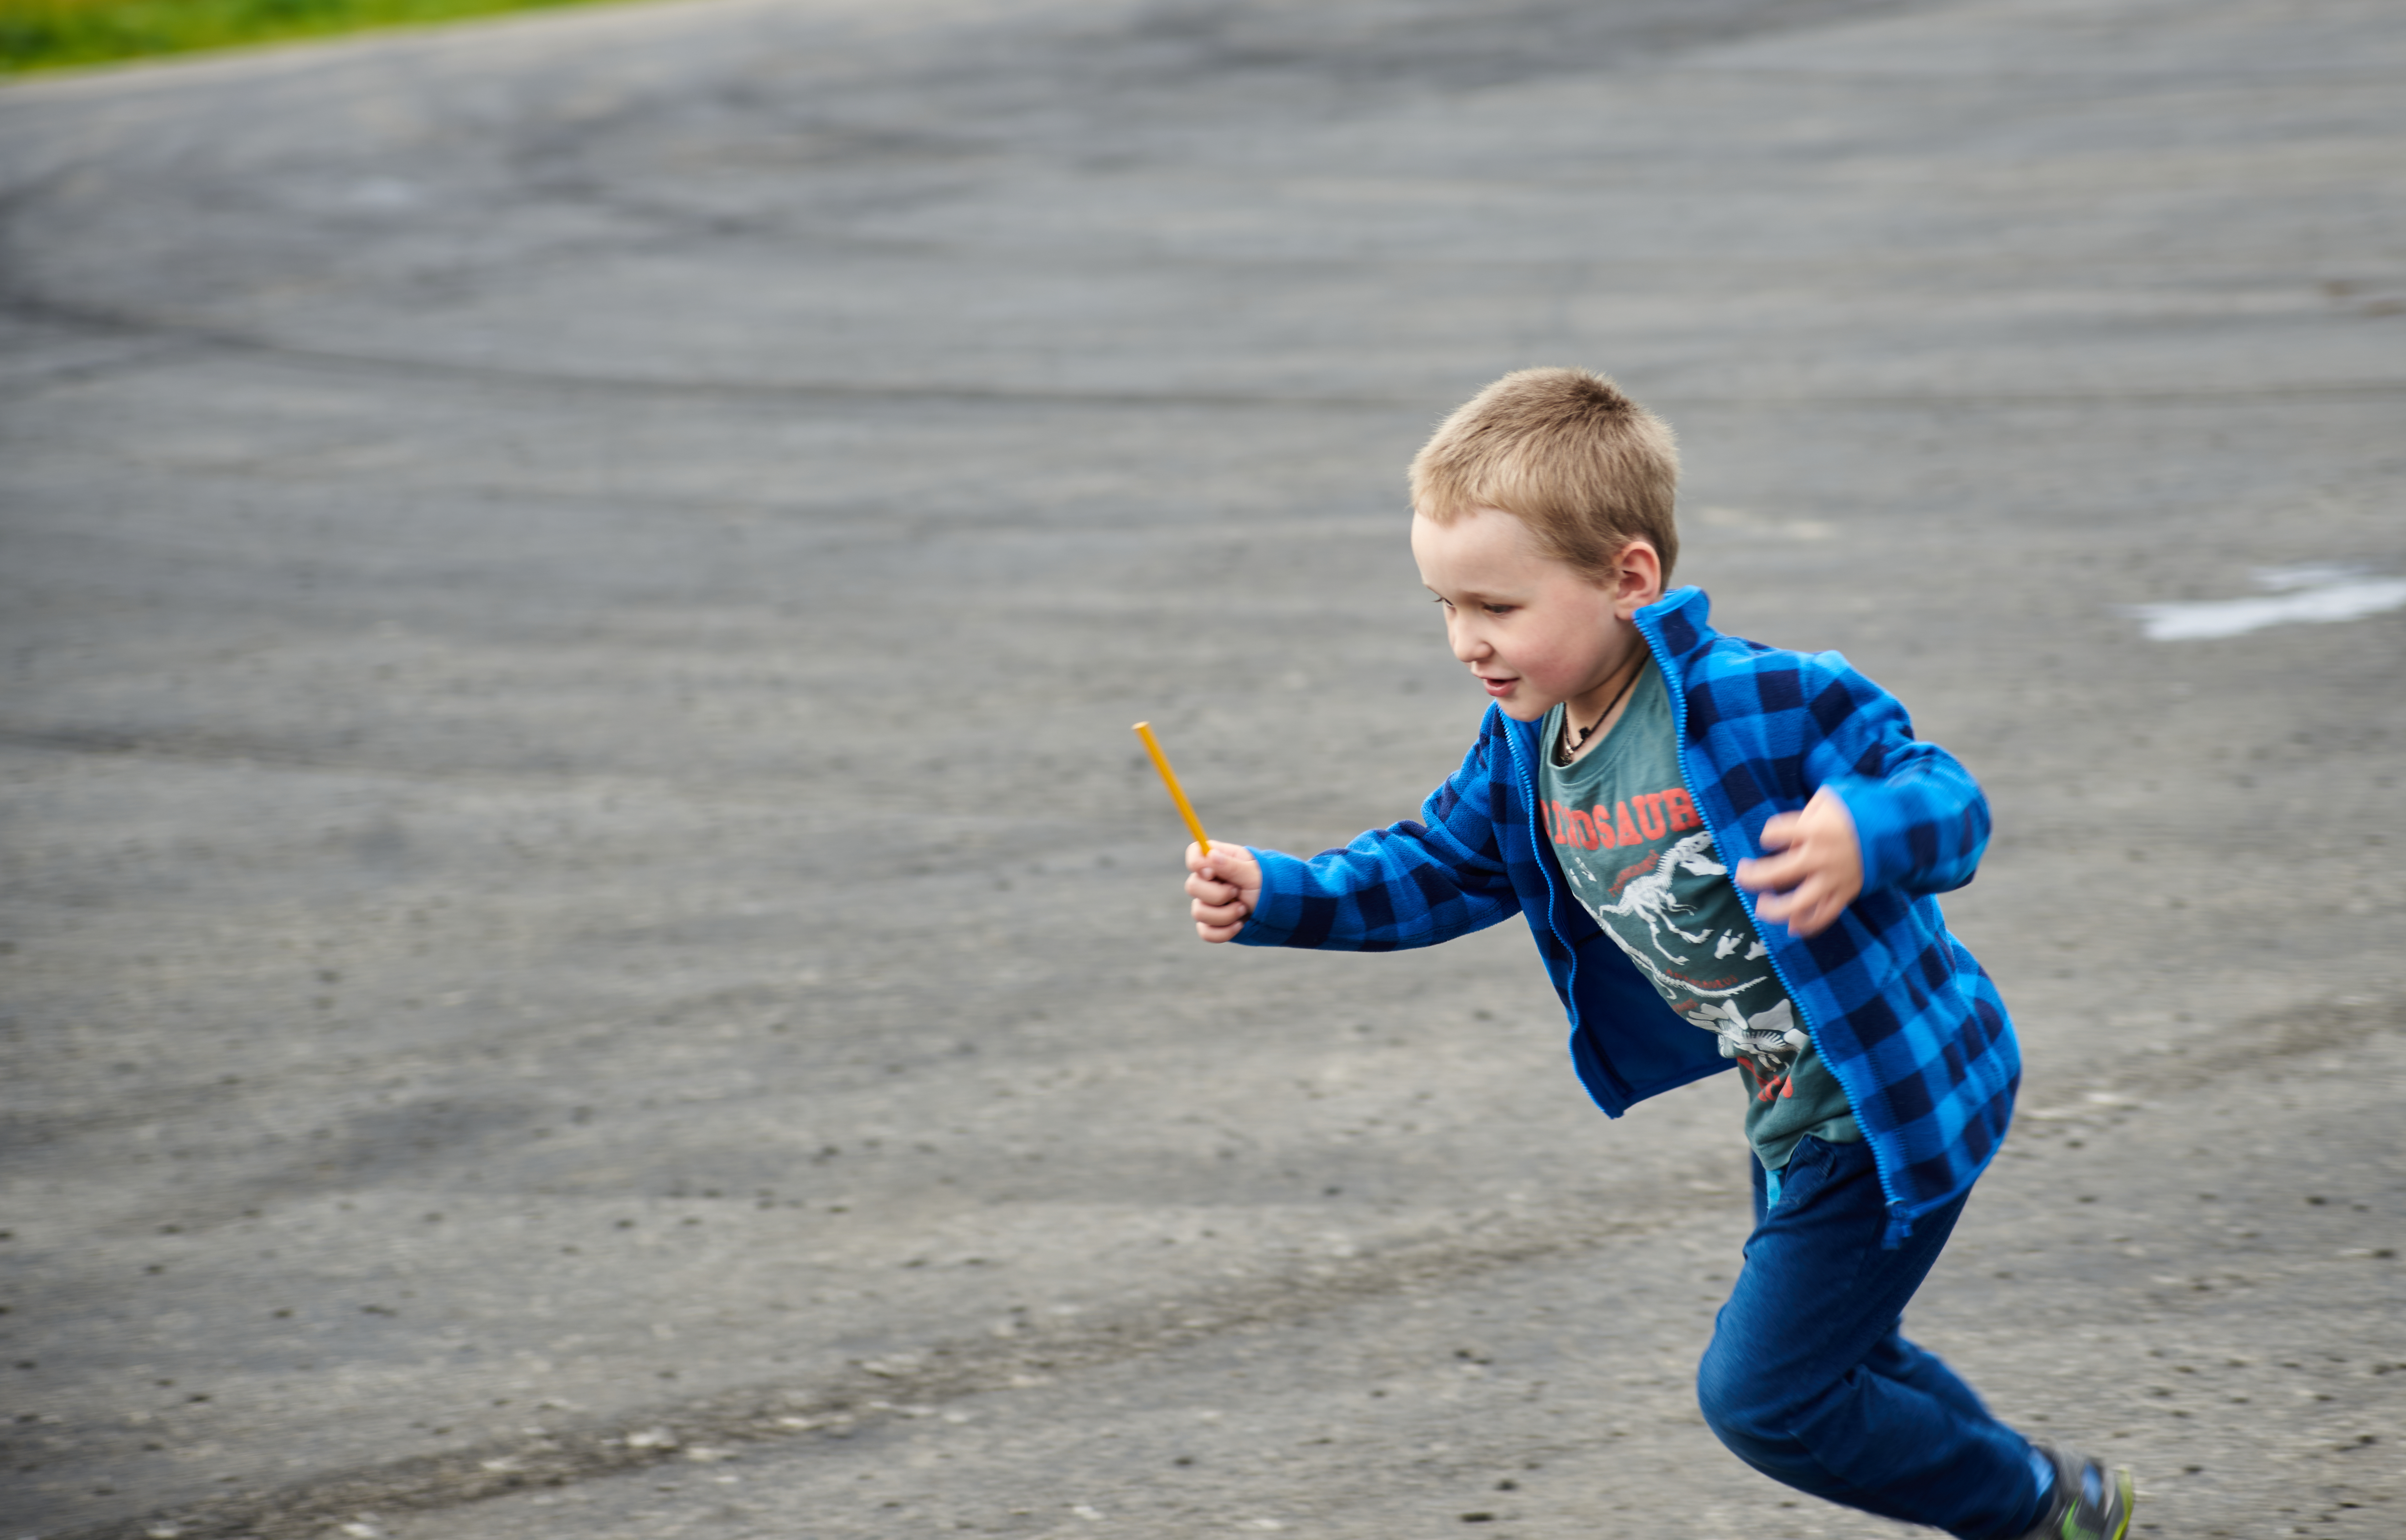 A little boy running on the road | Source: Shutterstock